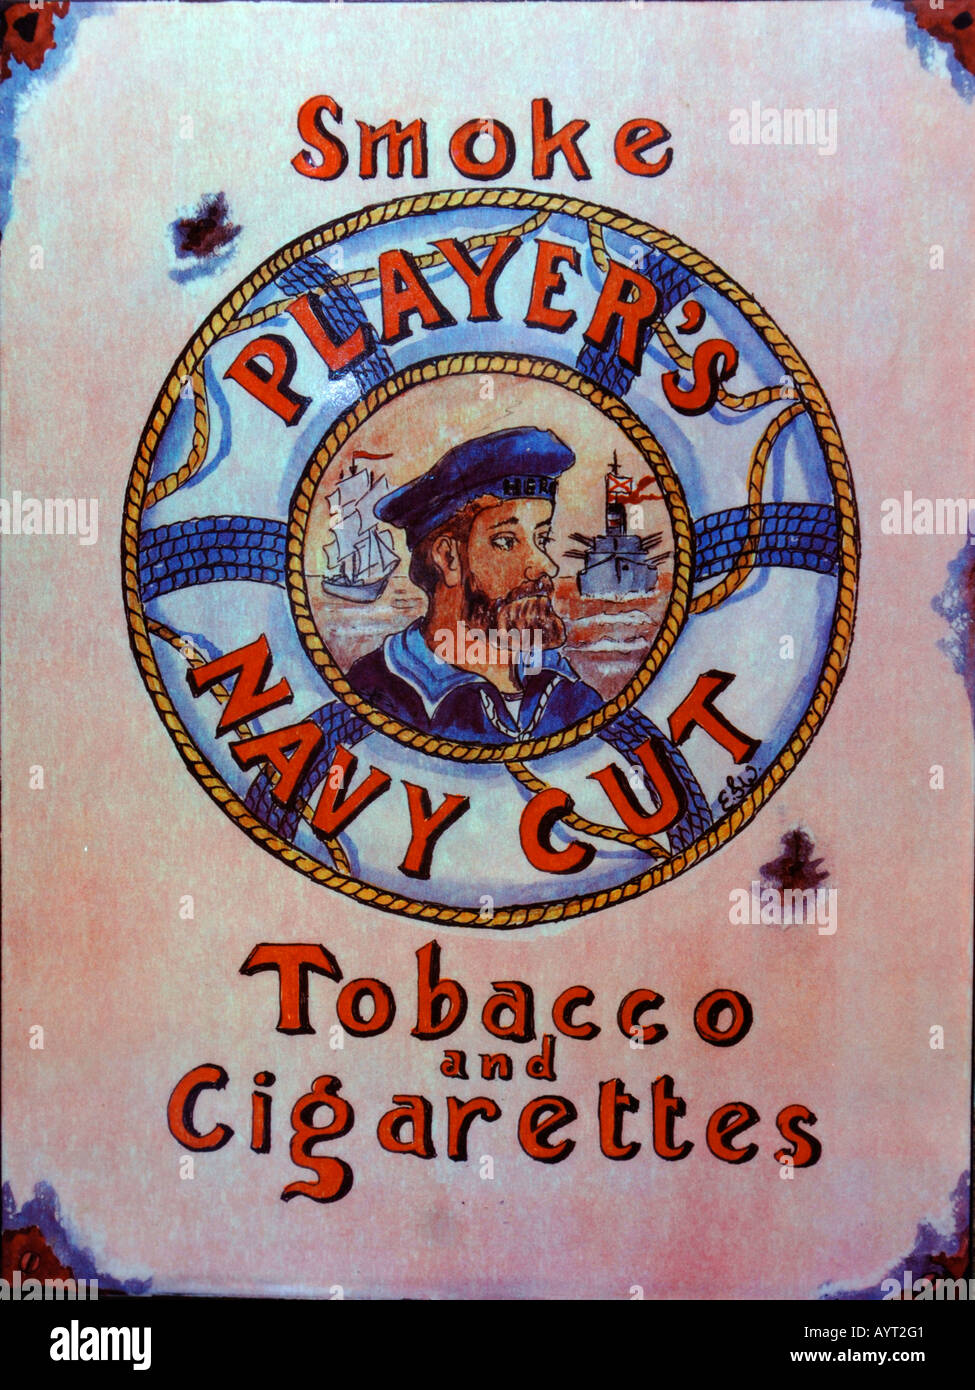 Player's Navy Cut cigarette advert Stock Photo